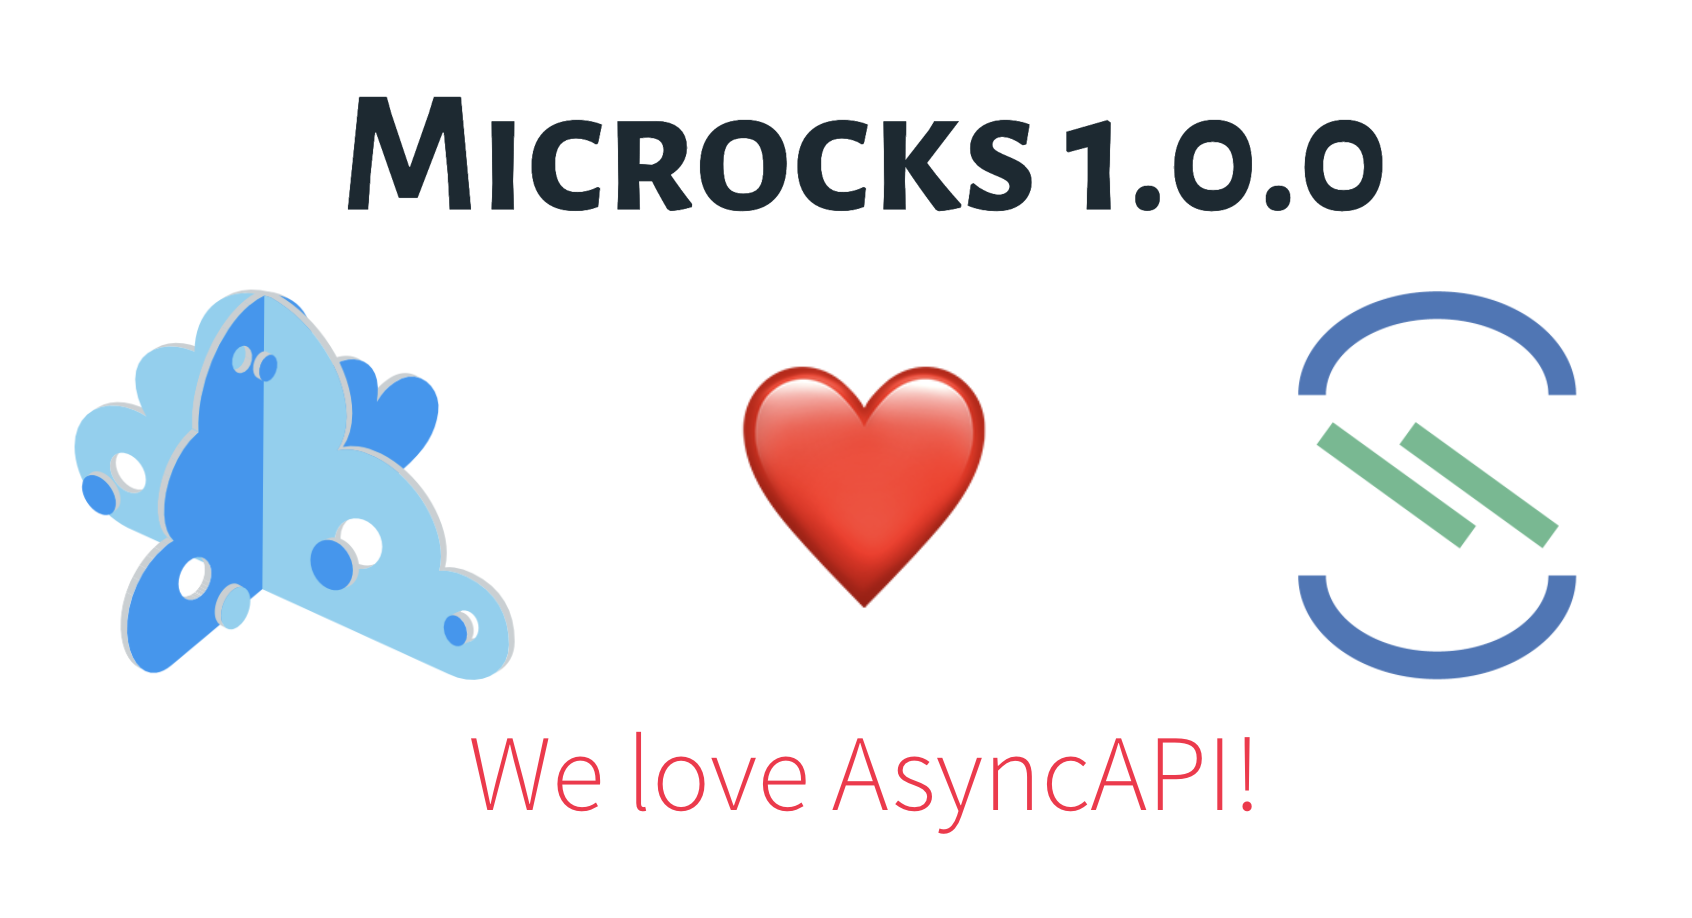 microcks-loves-asyncapi